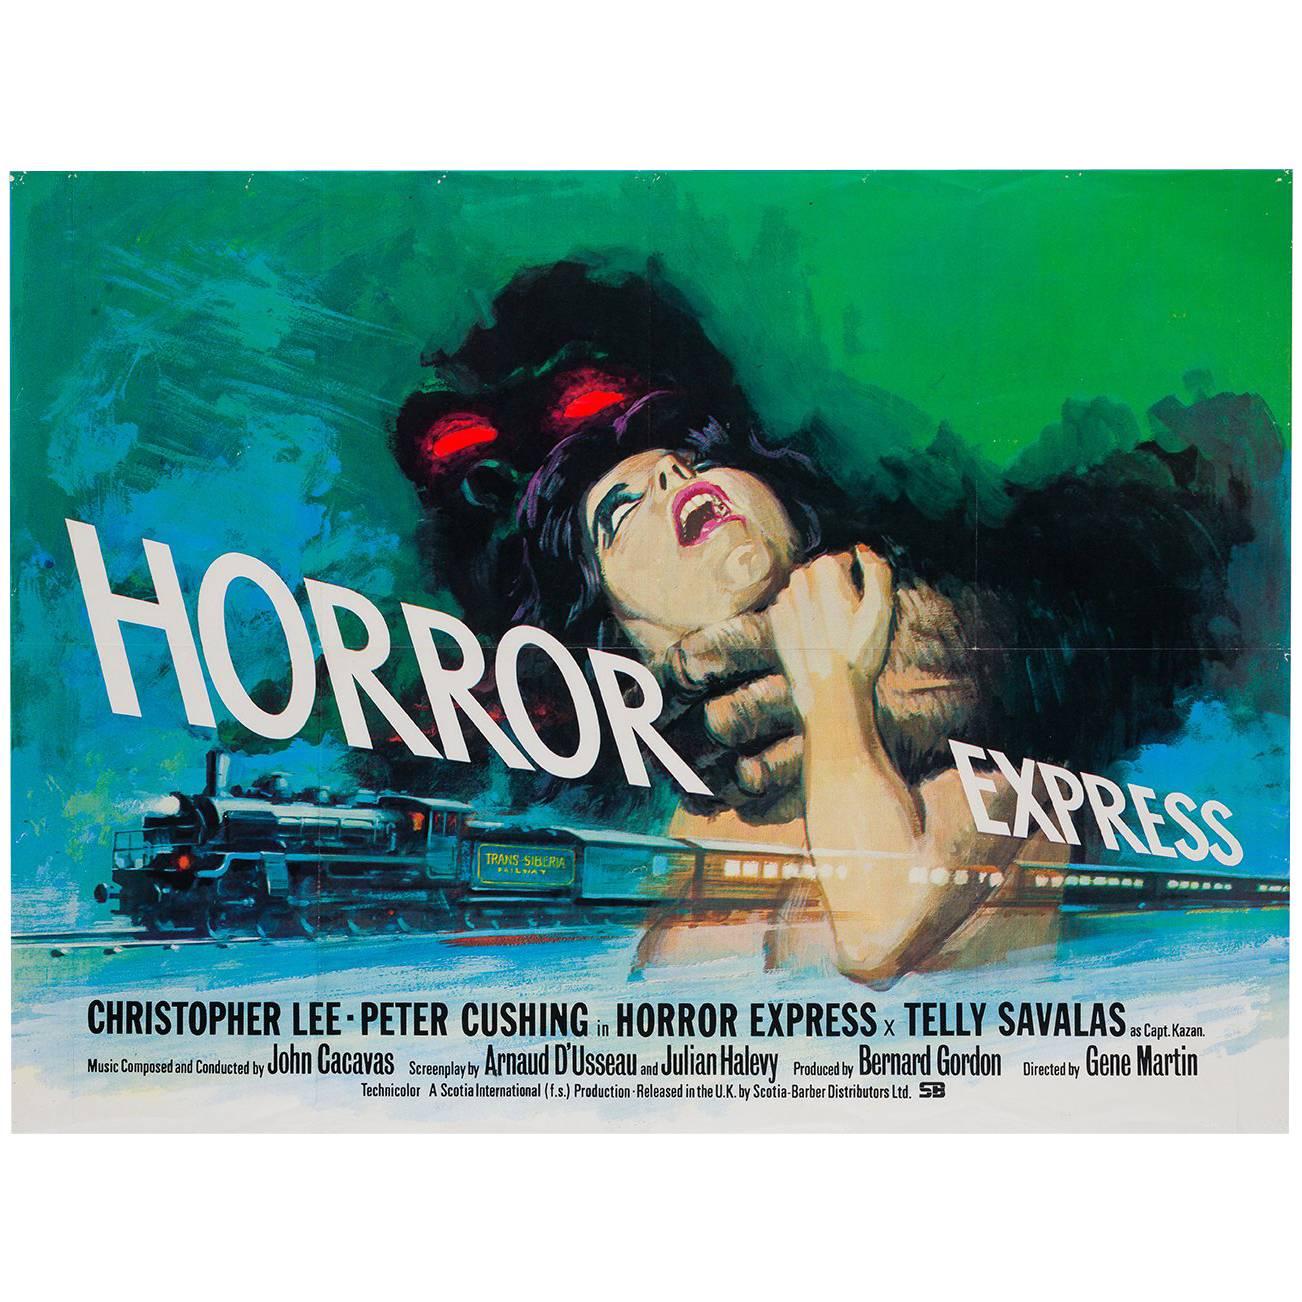 Horror Express UK Film Poster, 1972, Tom Chantrell